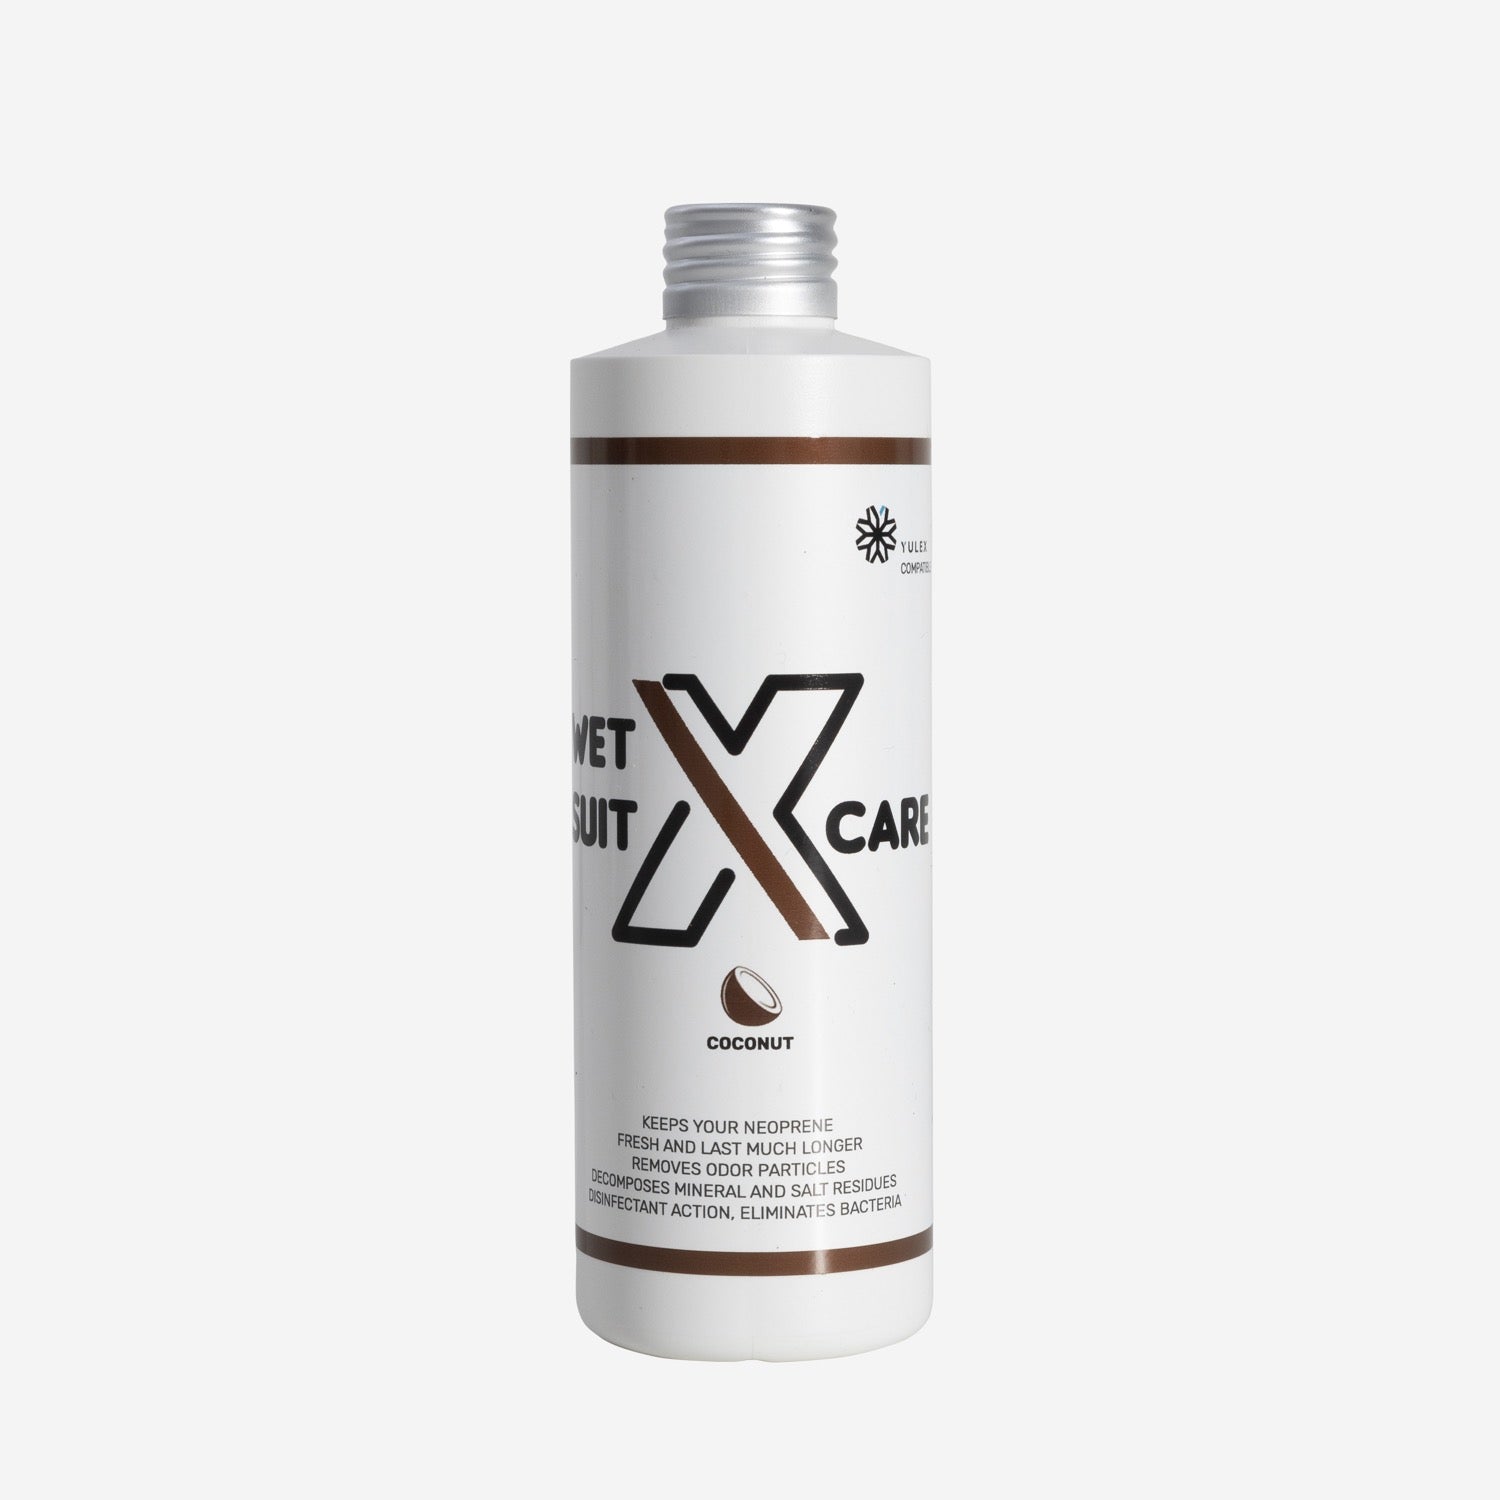 Eco Care X - Neoprene Shampoo - 250ml - Coconut fragrance